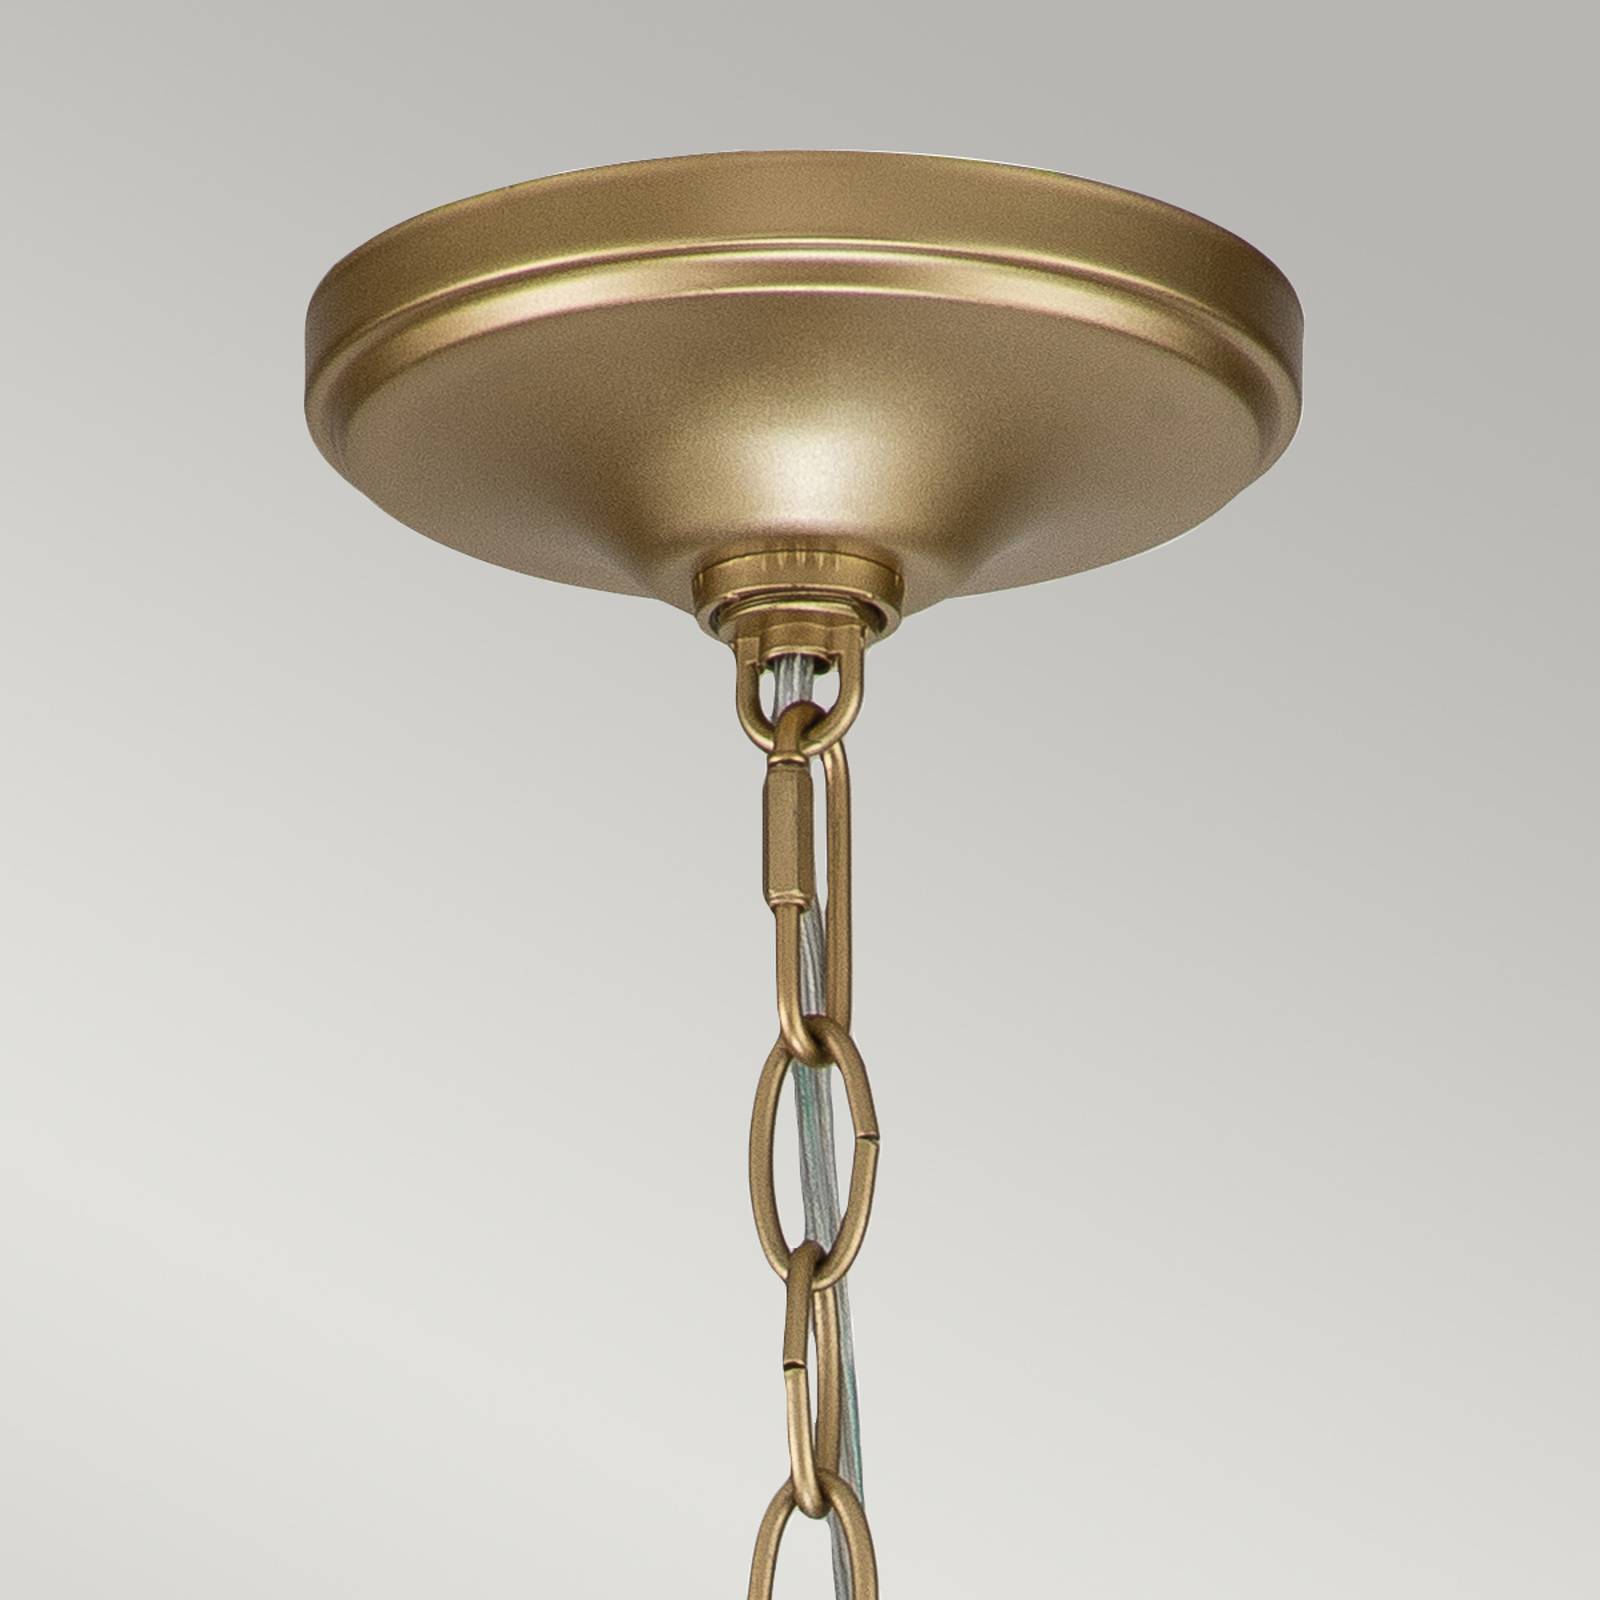 KICHLER Capitol Hill chandelier, 6-bulb, brass